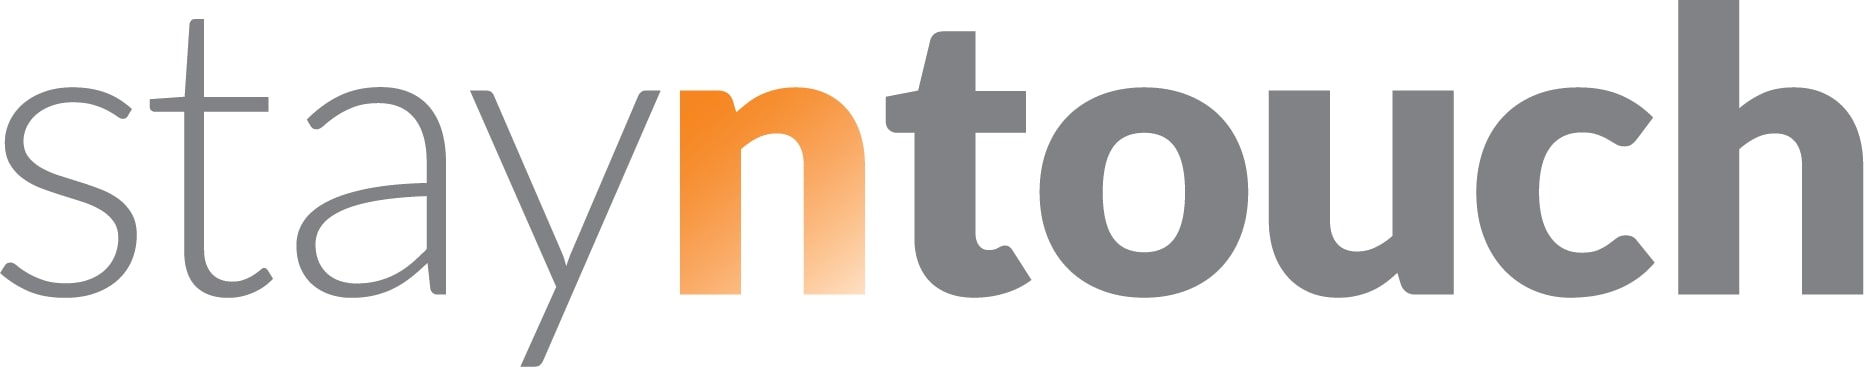 stayintouch_logo